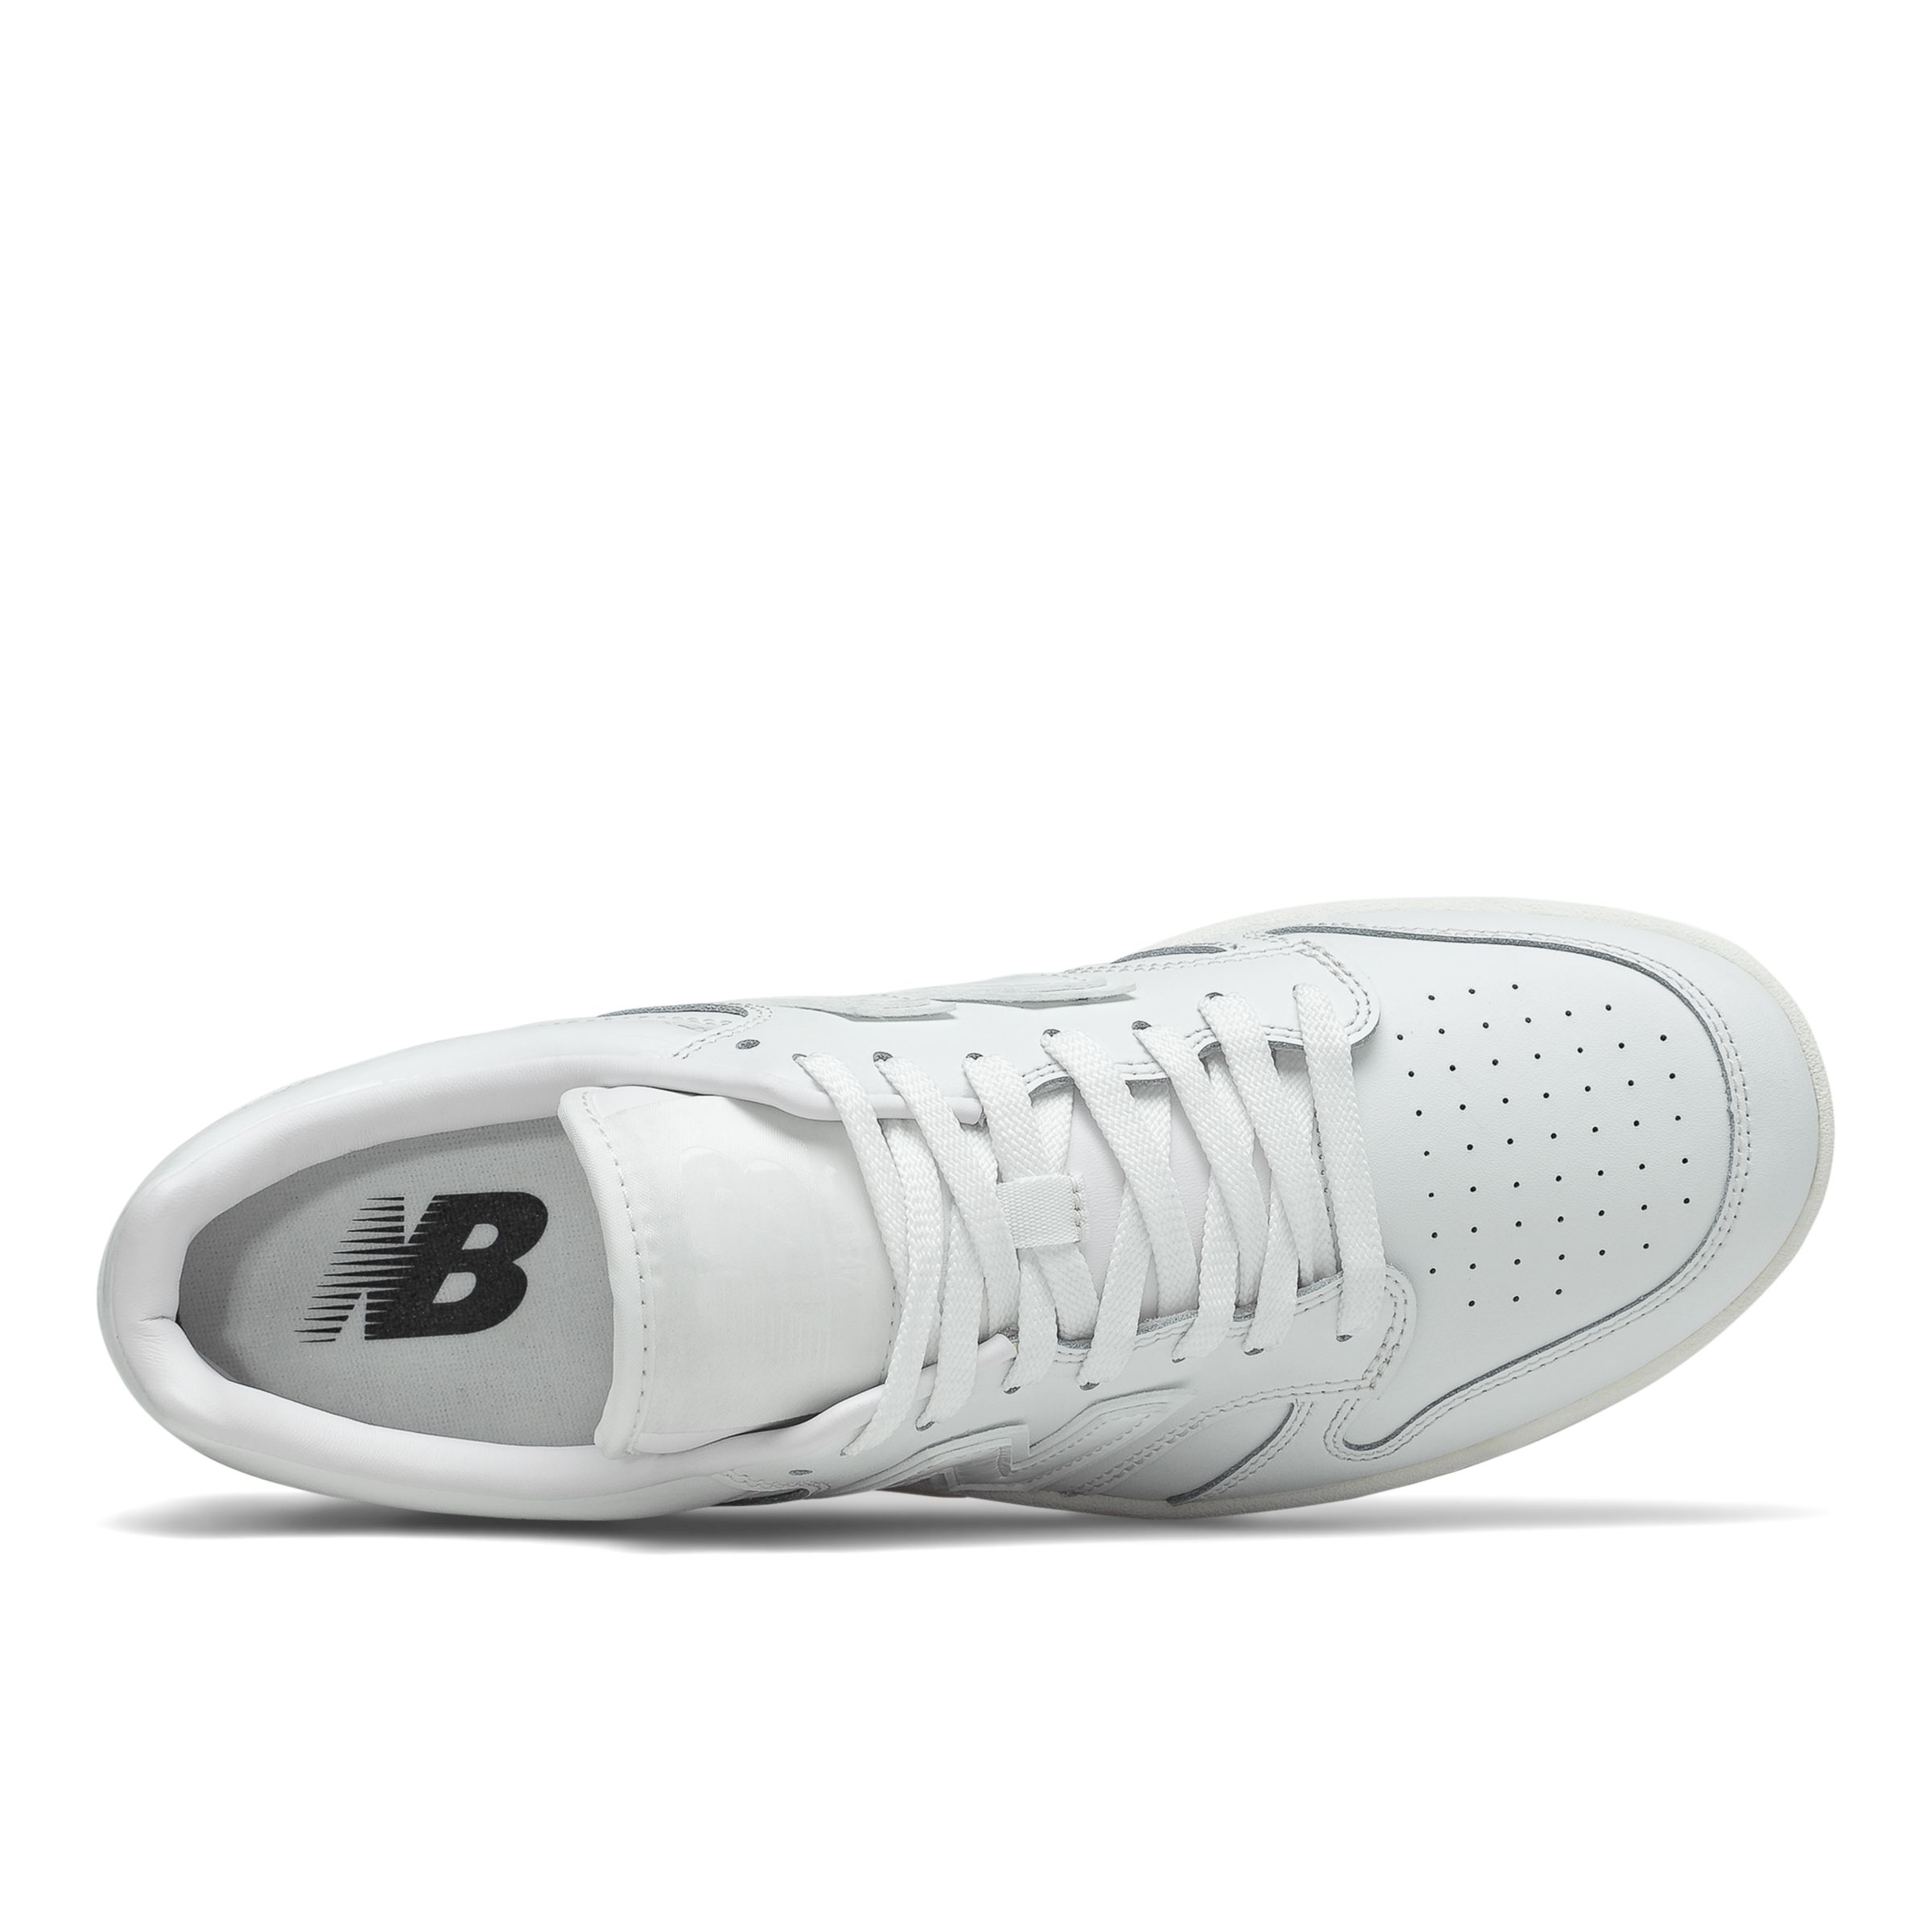 New Balance BB480 Men's Running Sport Lifestyle Shoes | eBay